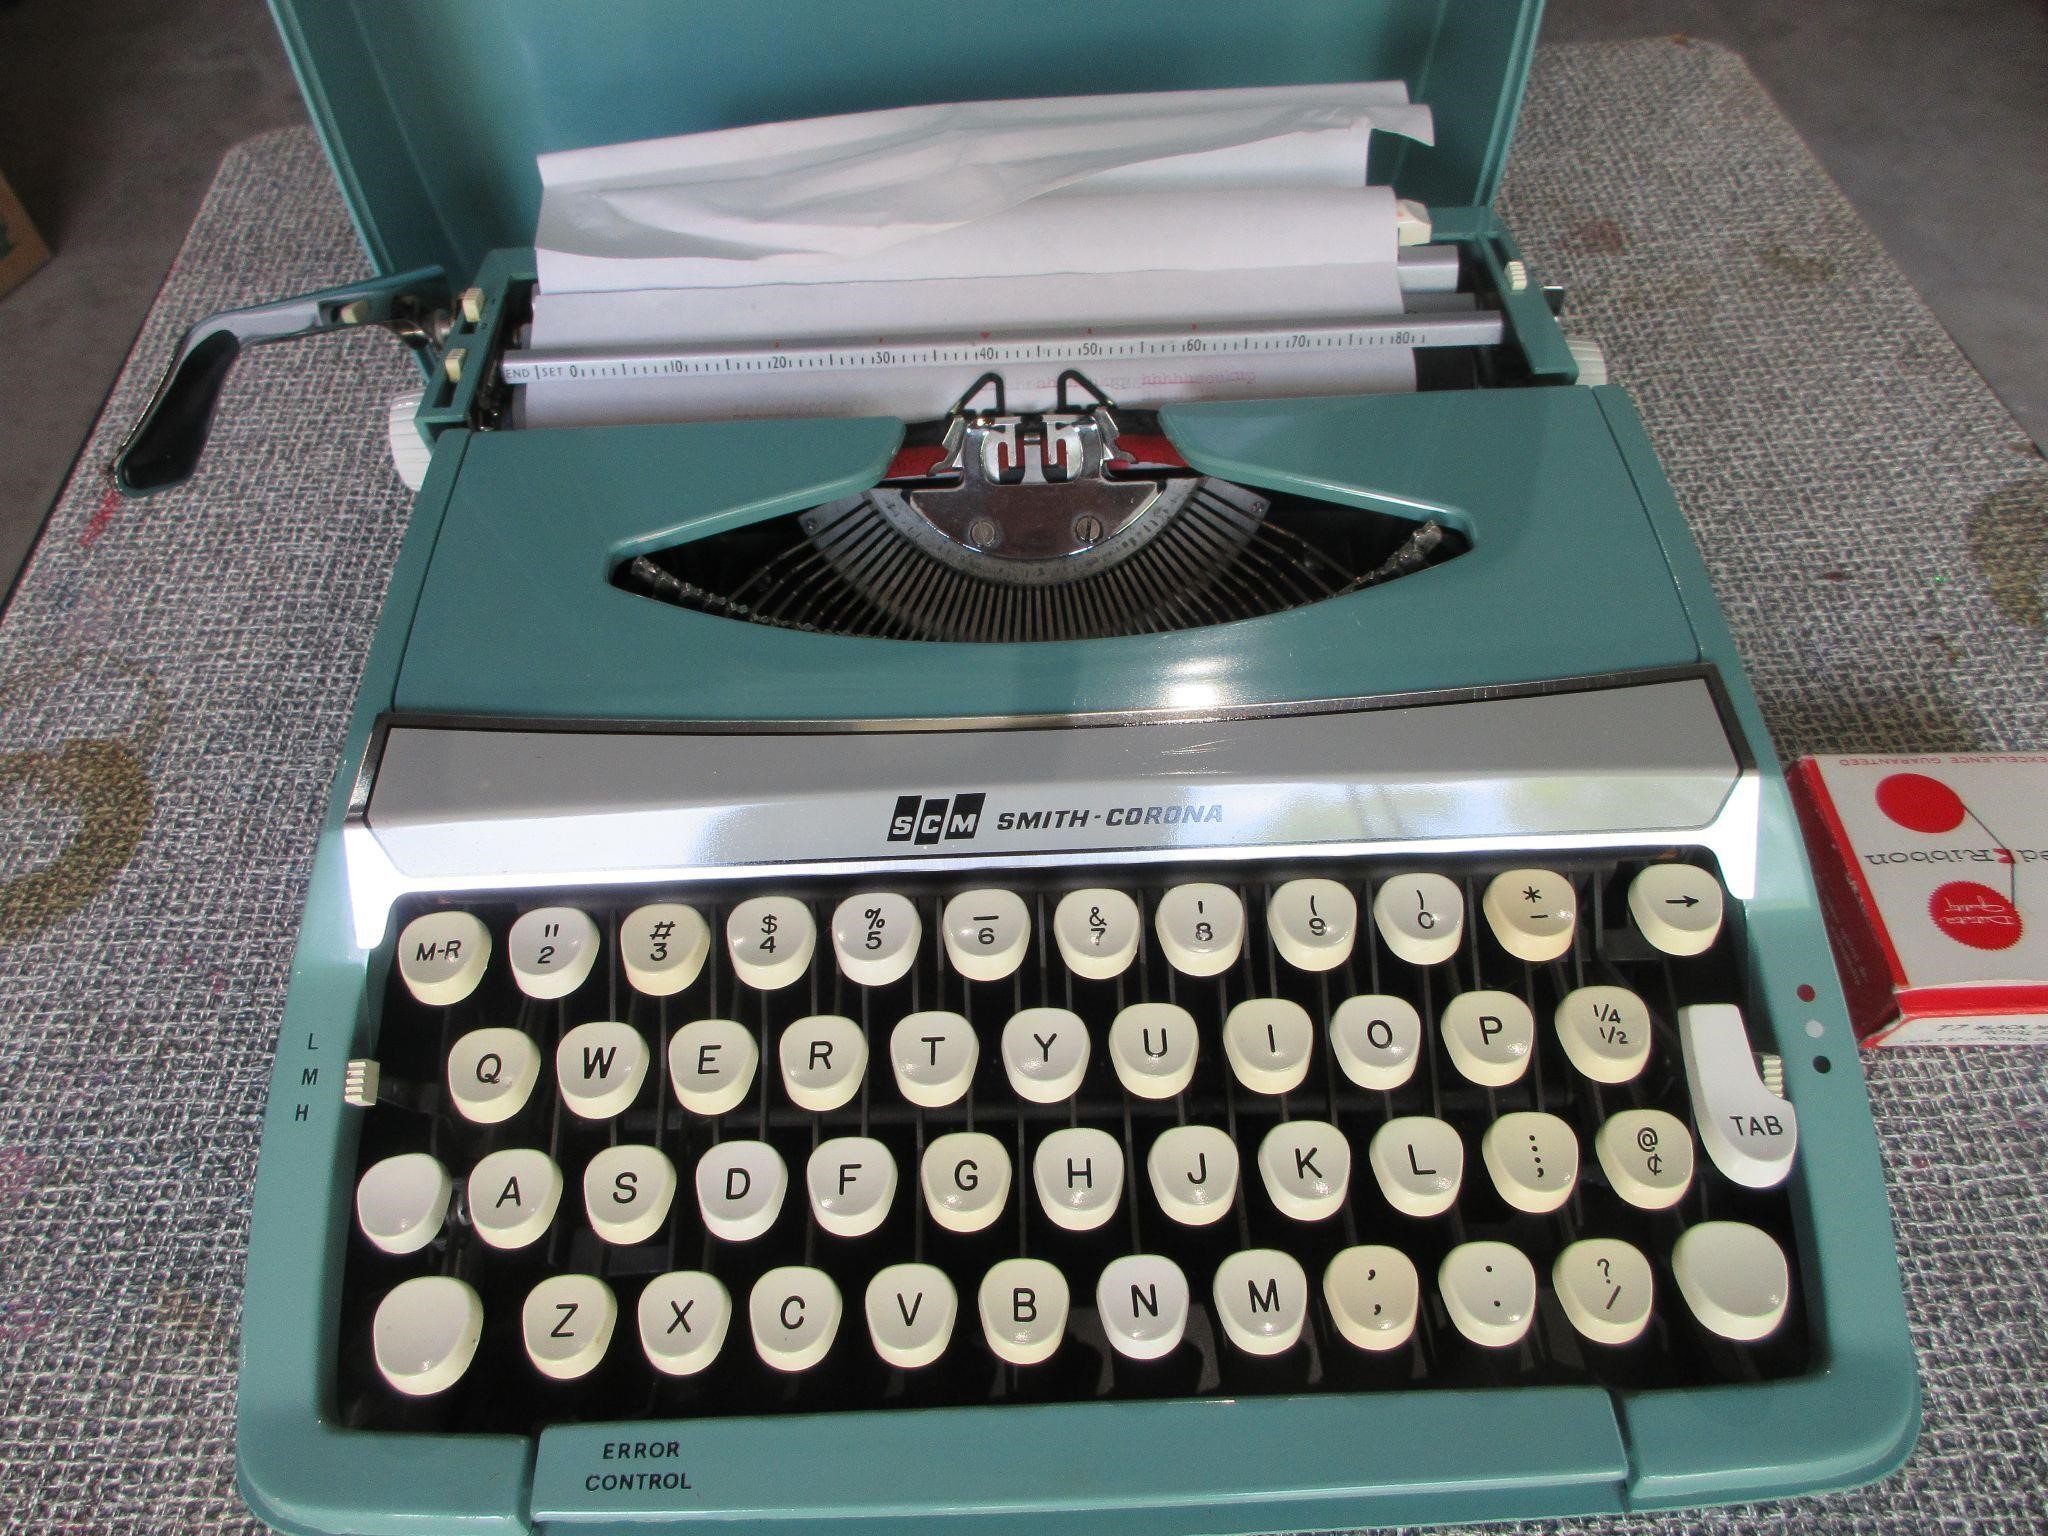 Smith Corona Manual Typewriter in Case - Good Cond